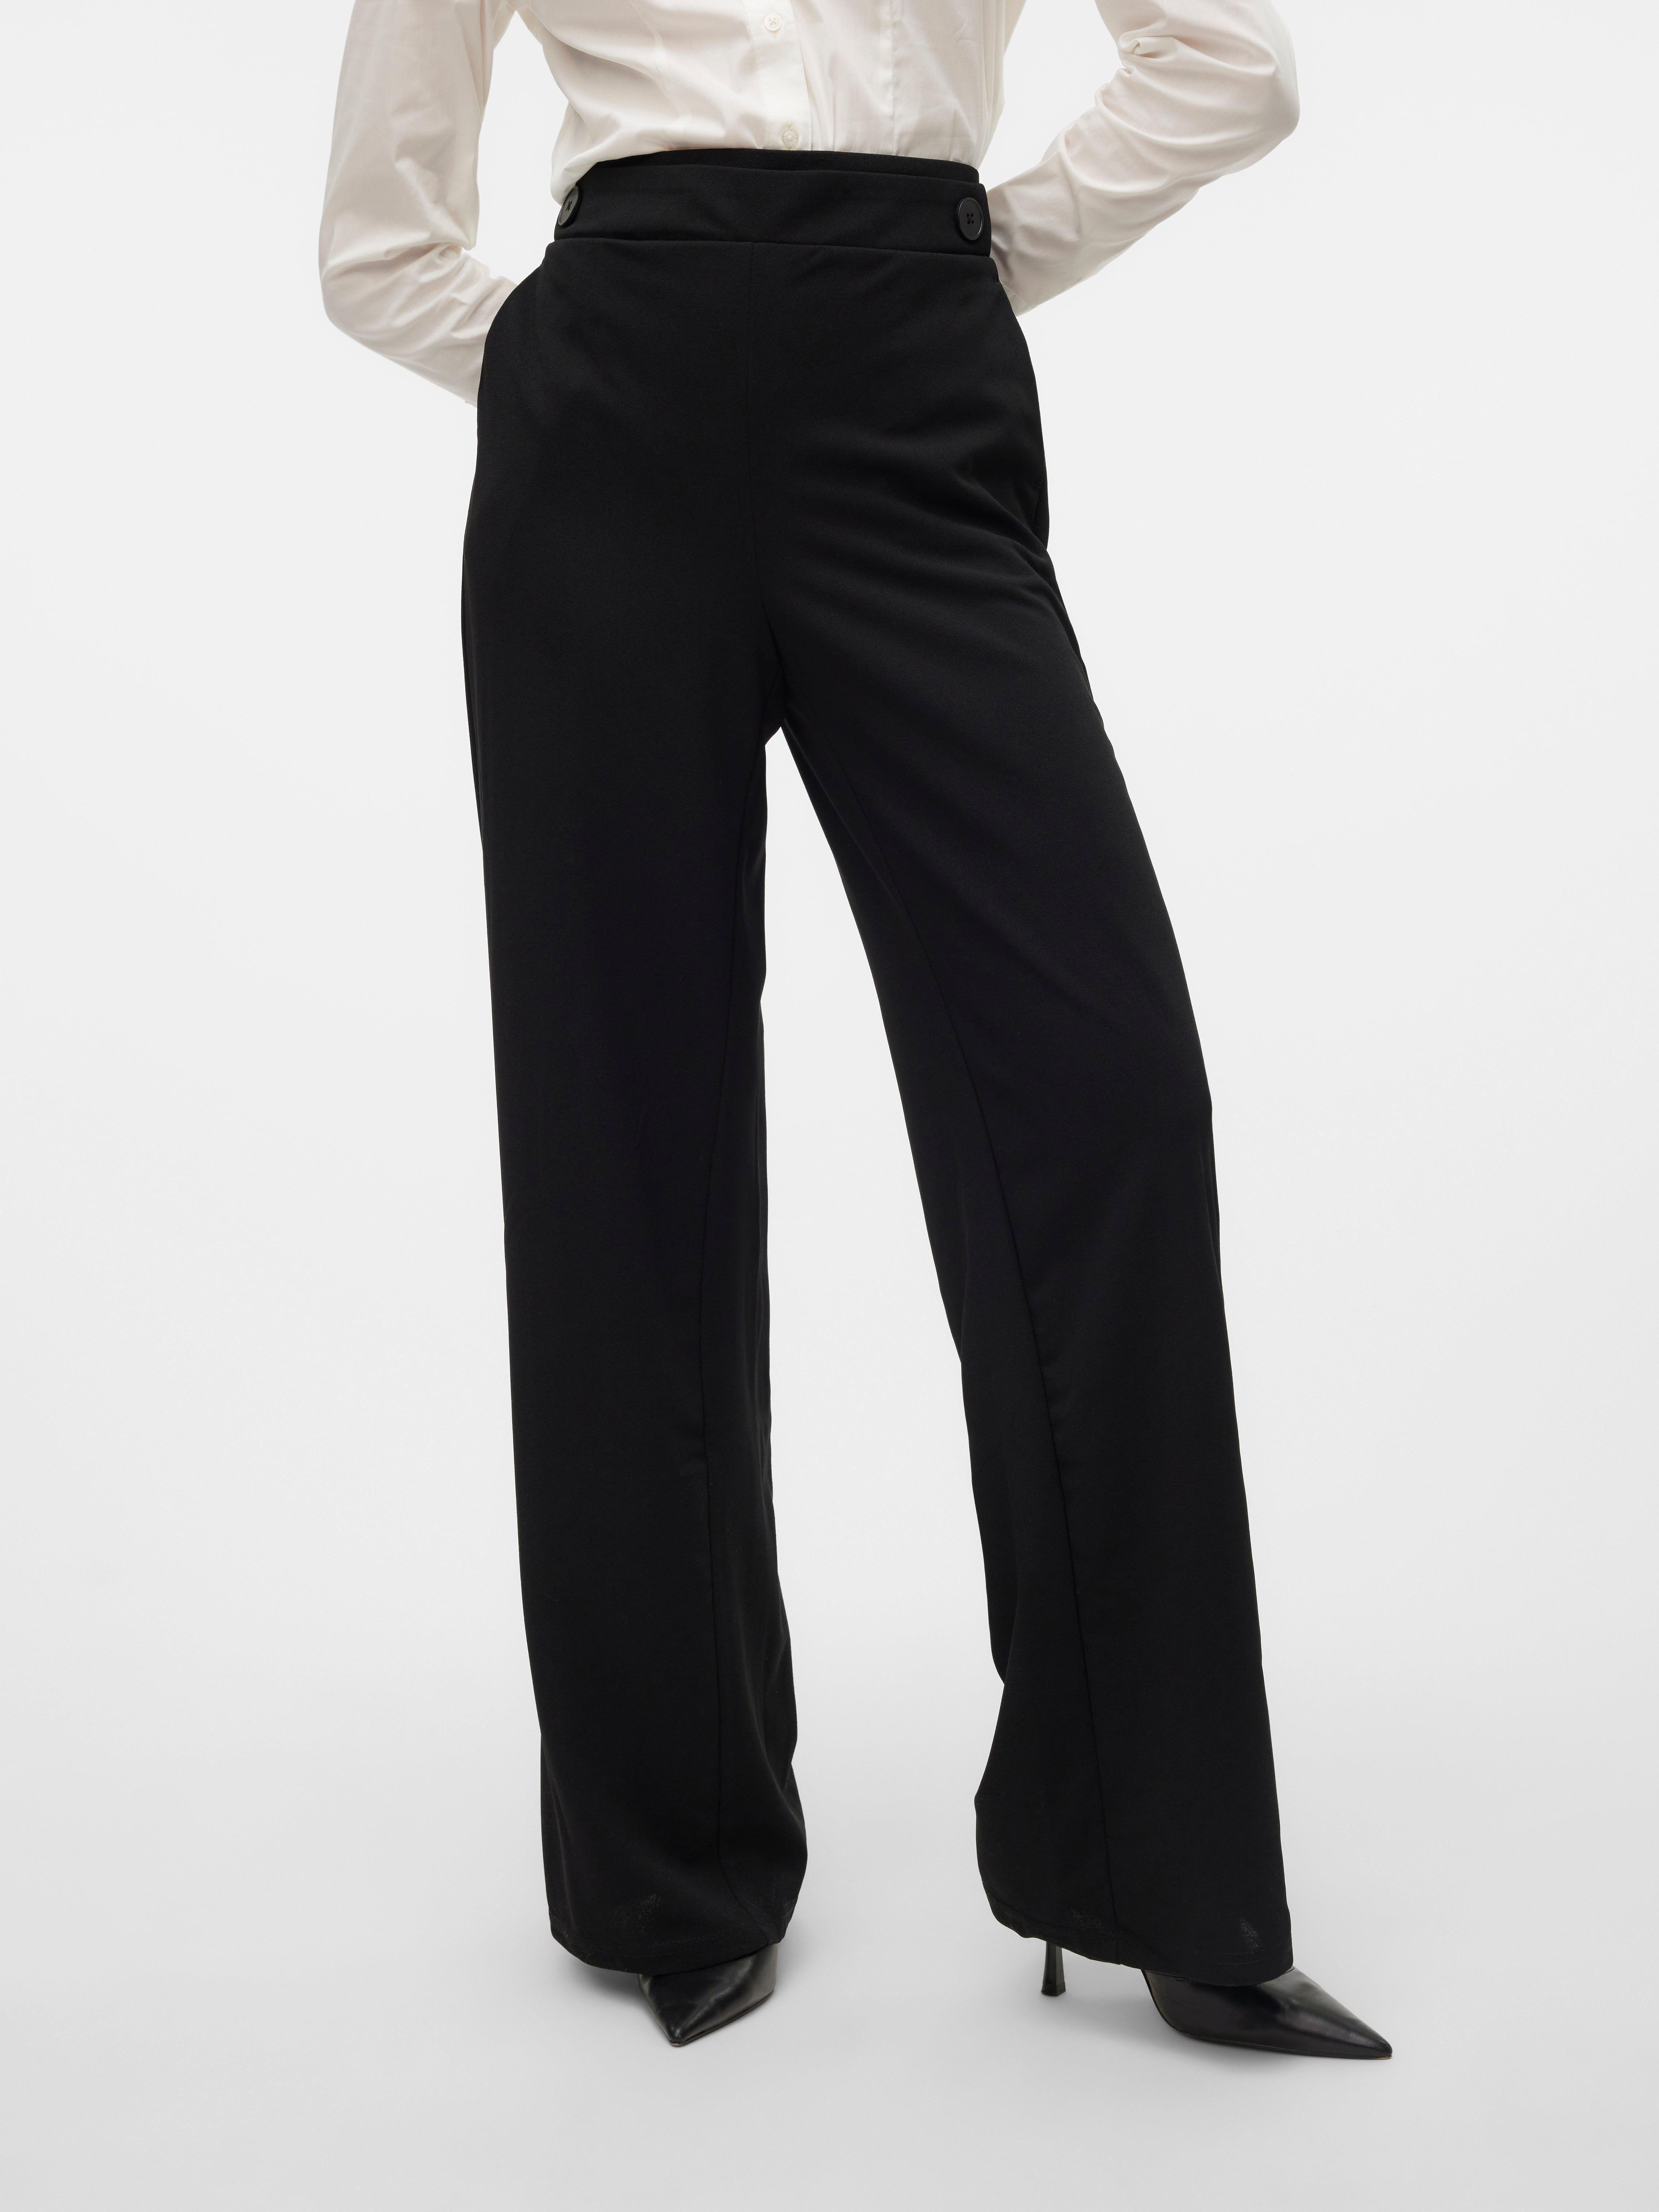 Buy Alto Moda By Pantaloons Men's Casual Wear Trousers  205000005784440_Camel_7XL at Amazon.in